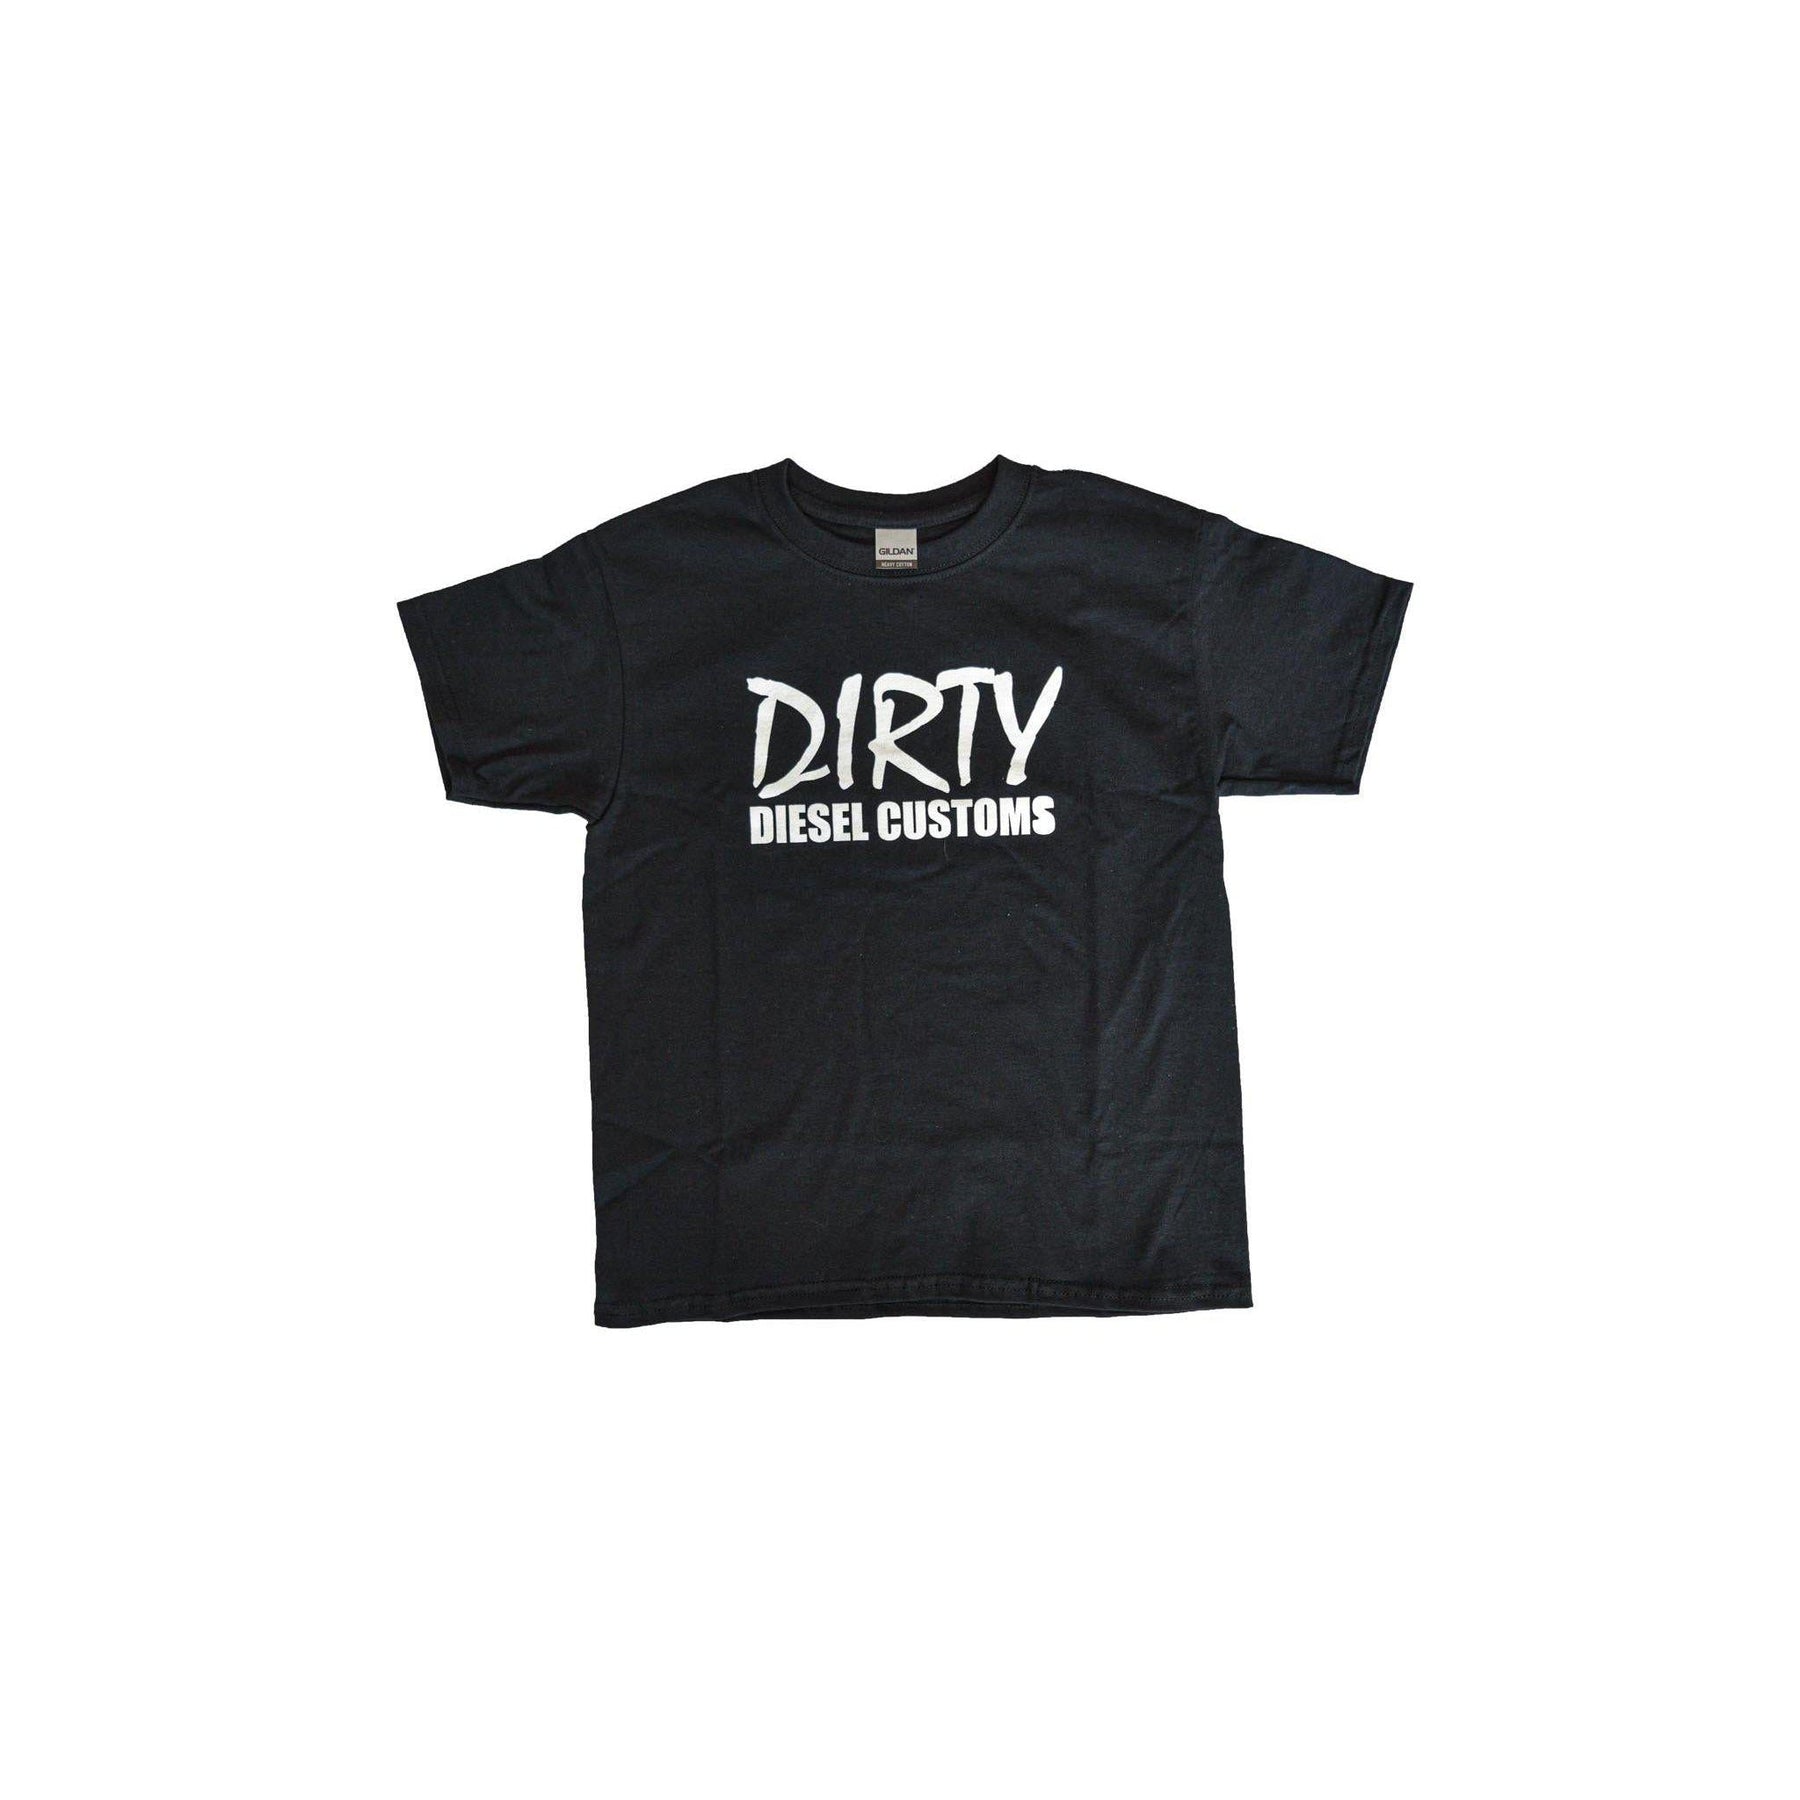 Classic Dirty Diesel Kids T-Shirt-T-Shirt-Dirty Diesel Customs-Dirty Diesel Customs